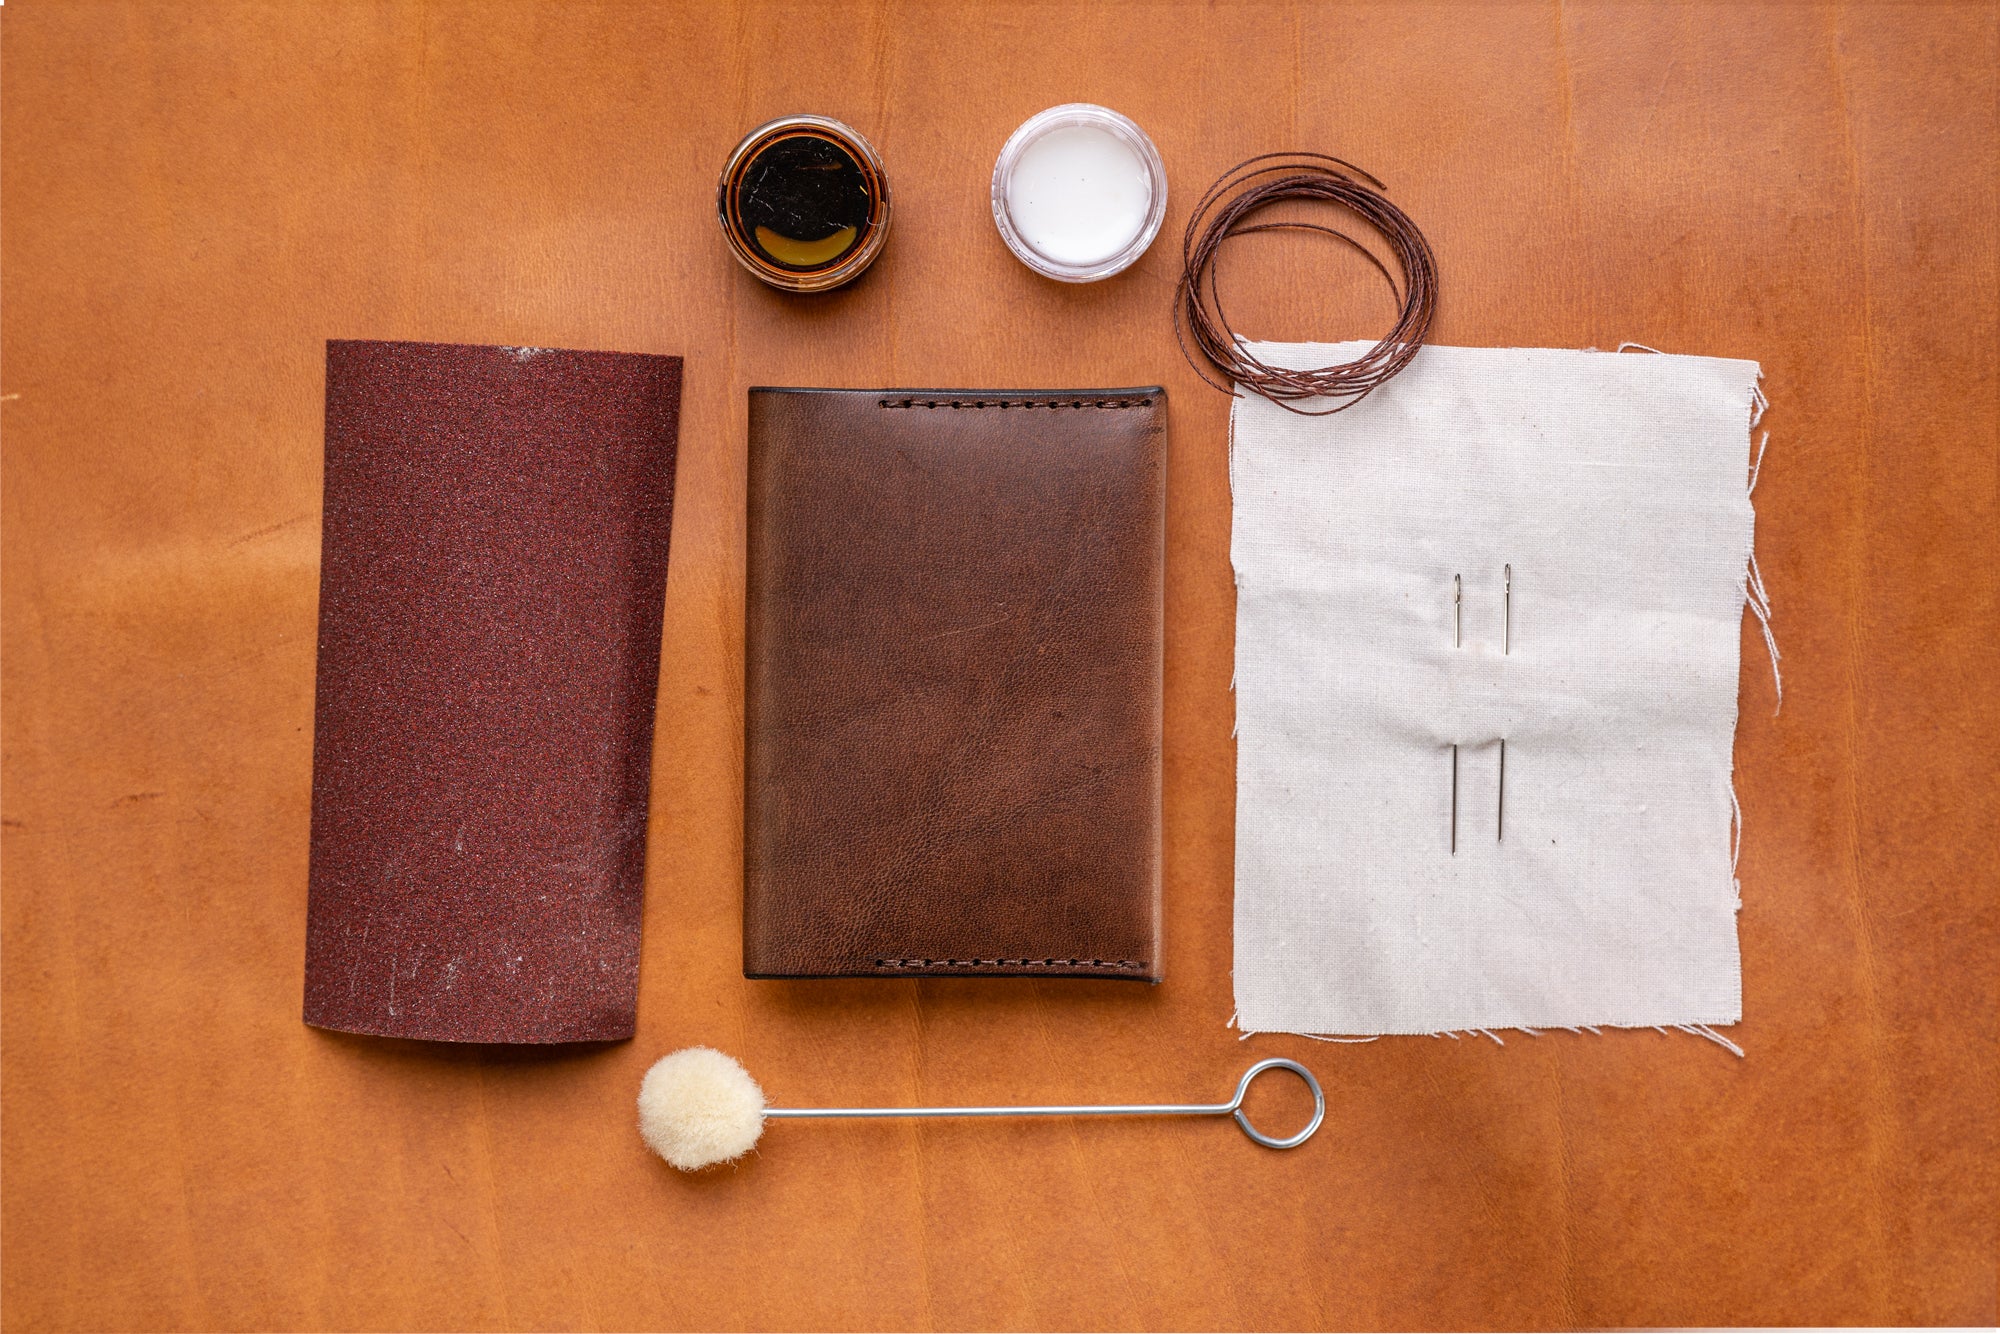 POPSEWING Full Grain Leather Sleeve Card Wallet DIY Kit All Black